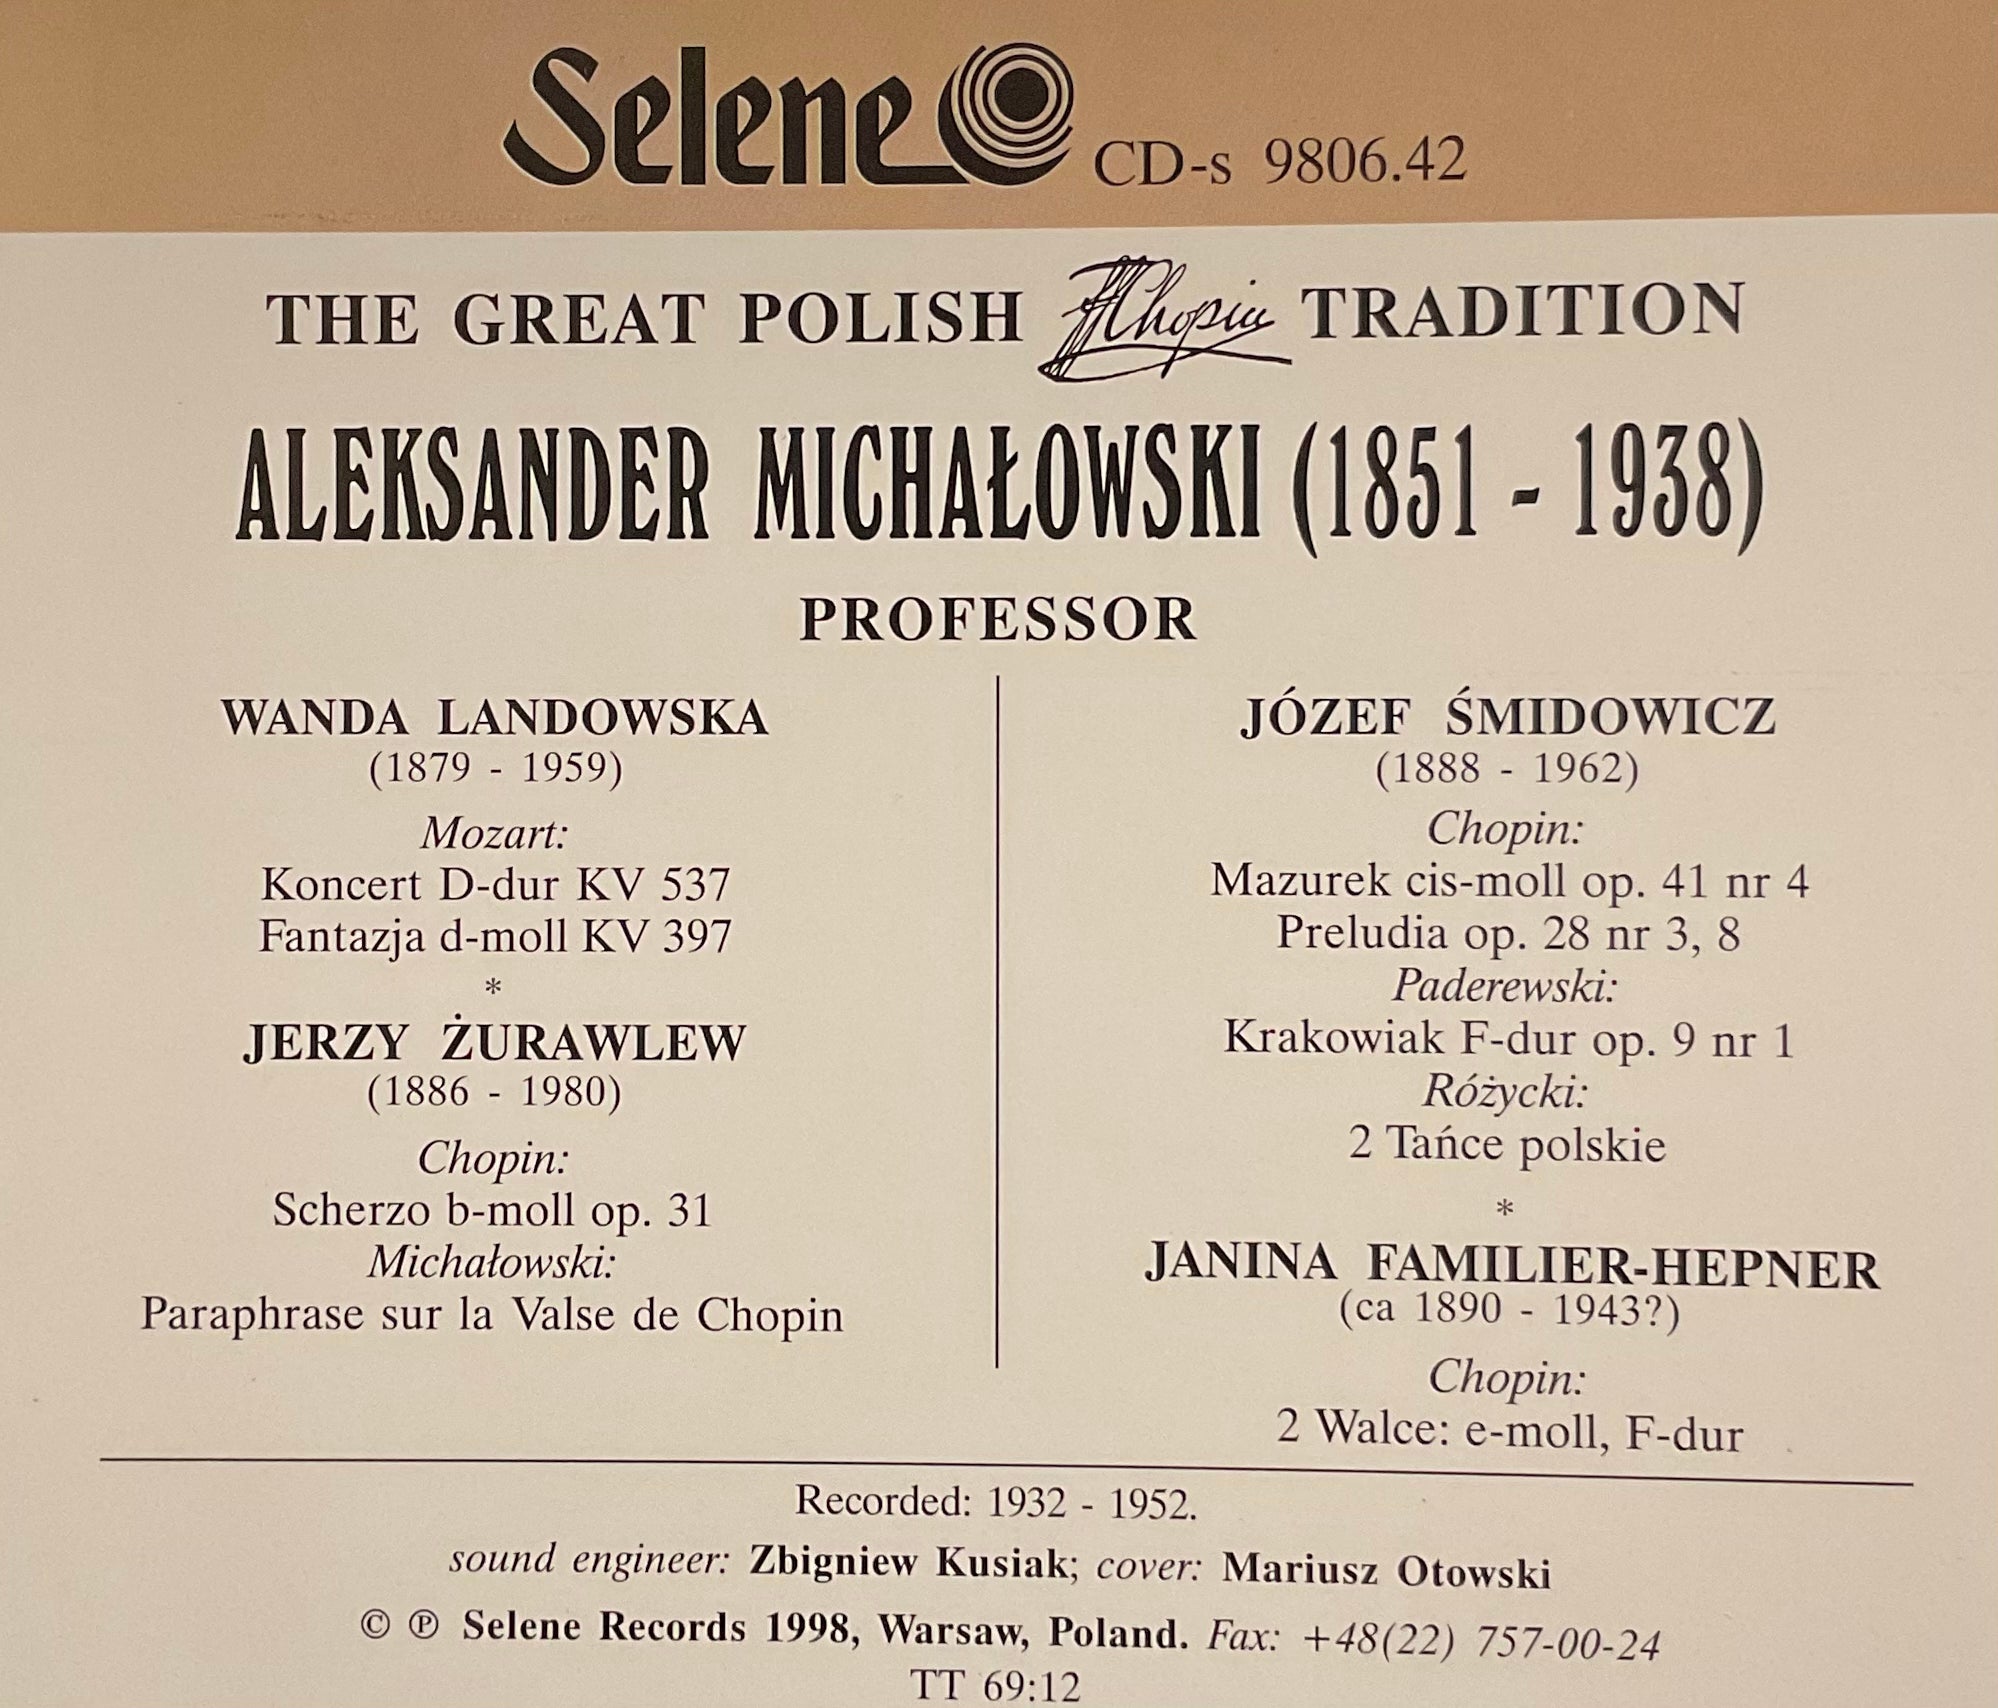 The Great Polish Chopin Tradition - Michalowski Vol. 2